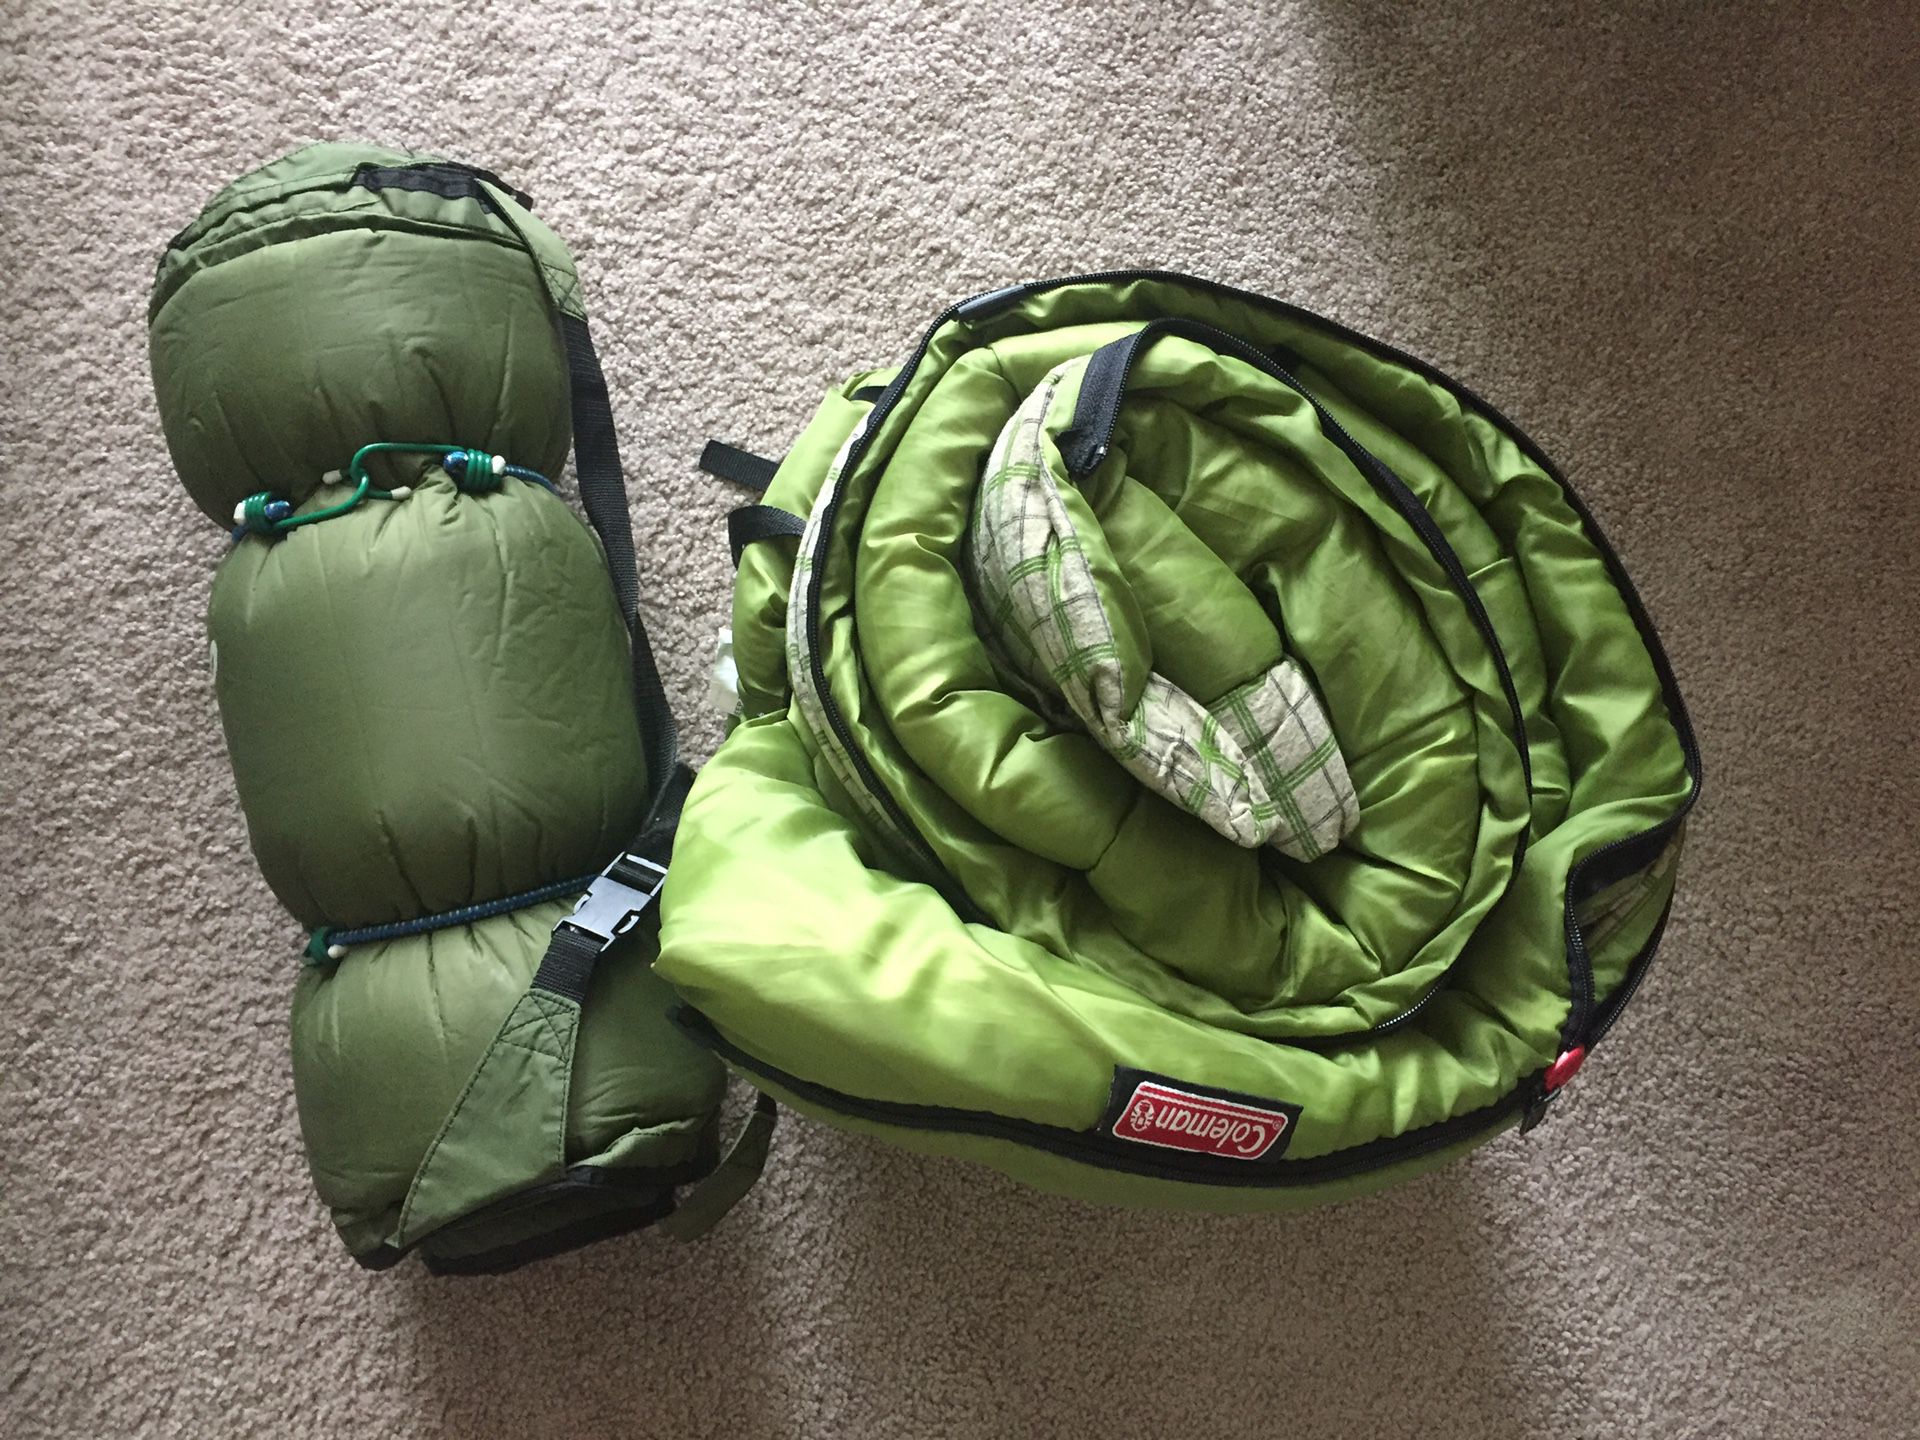 Coleman sleeping bag, Slumberjack self-inflating air mat